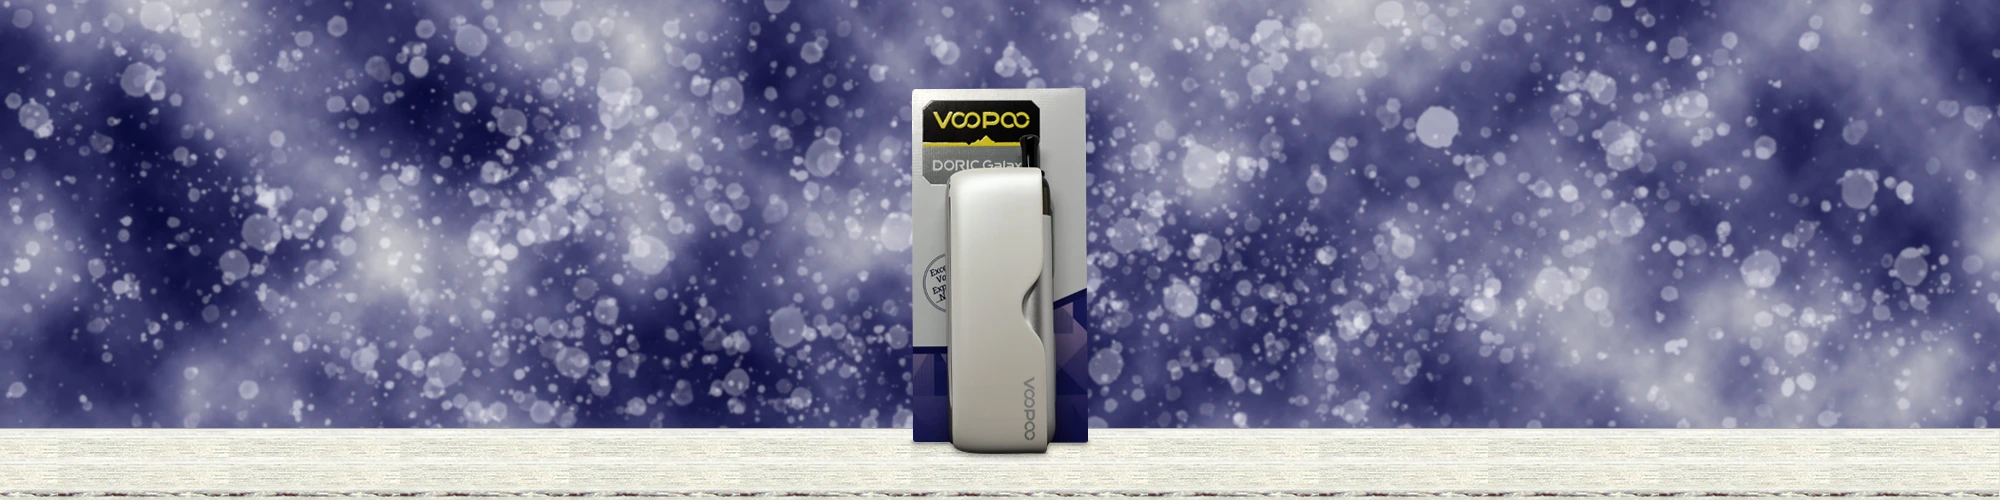 VOOPOO Doric Galaxy Review Main Banner